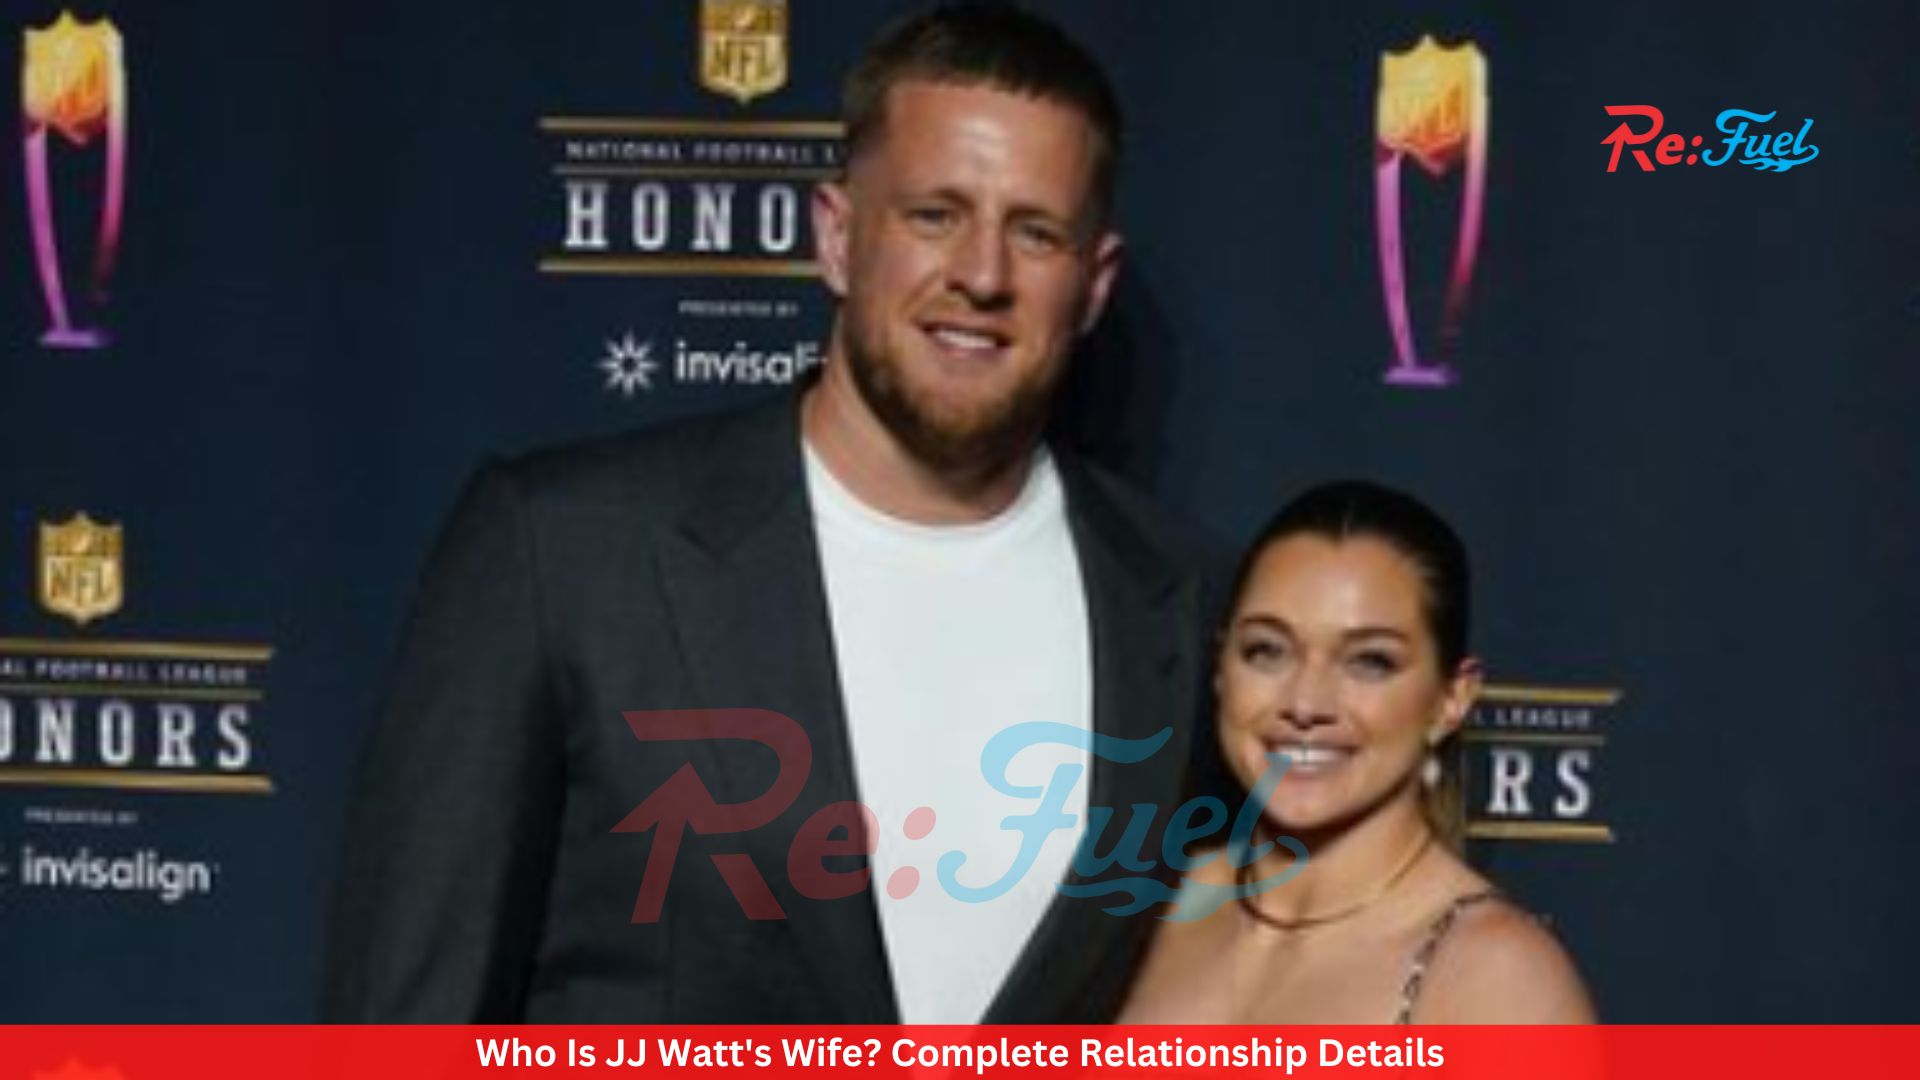 Who Is JJ Watt's Wife? Complete Relationship Details